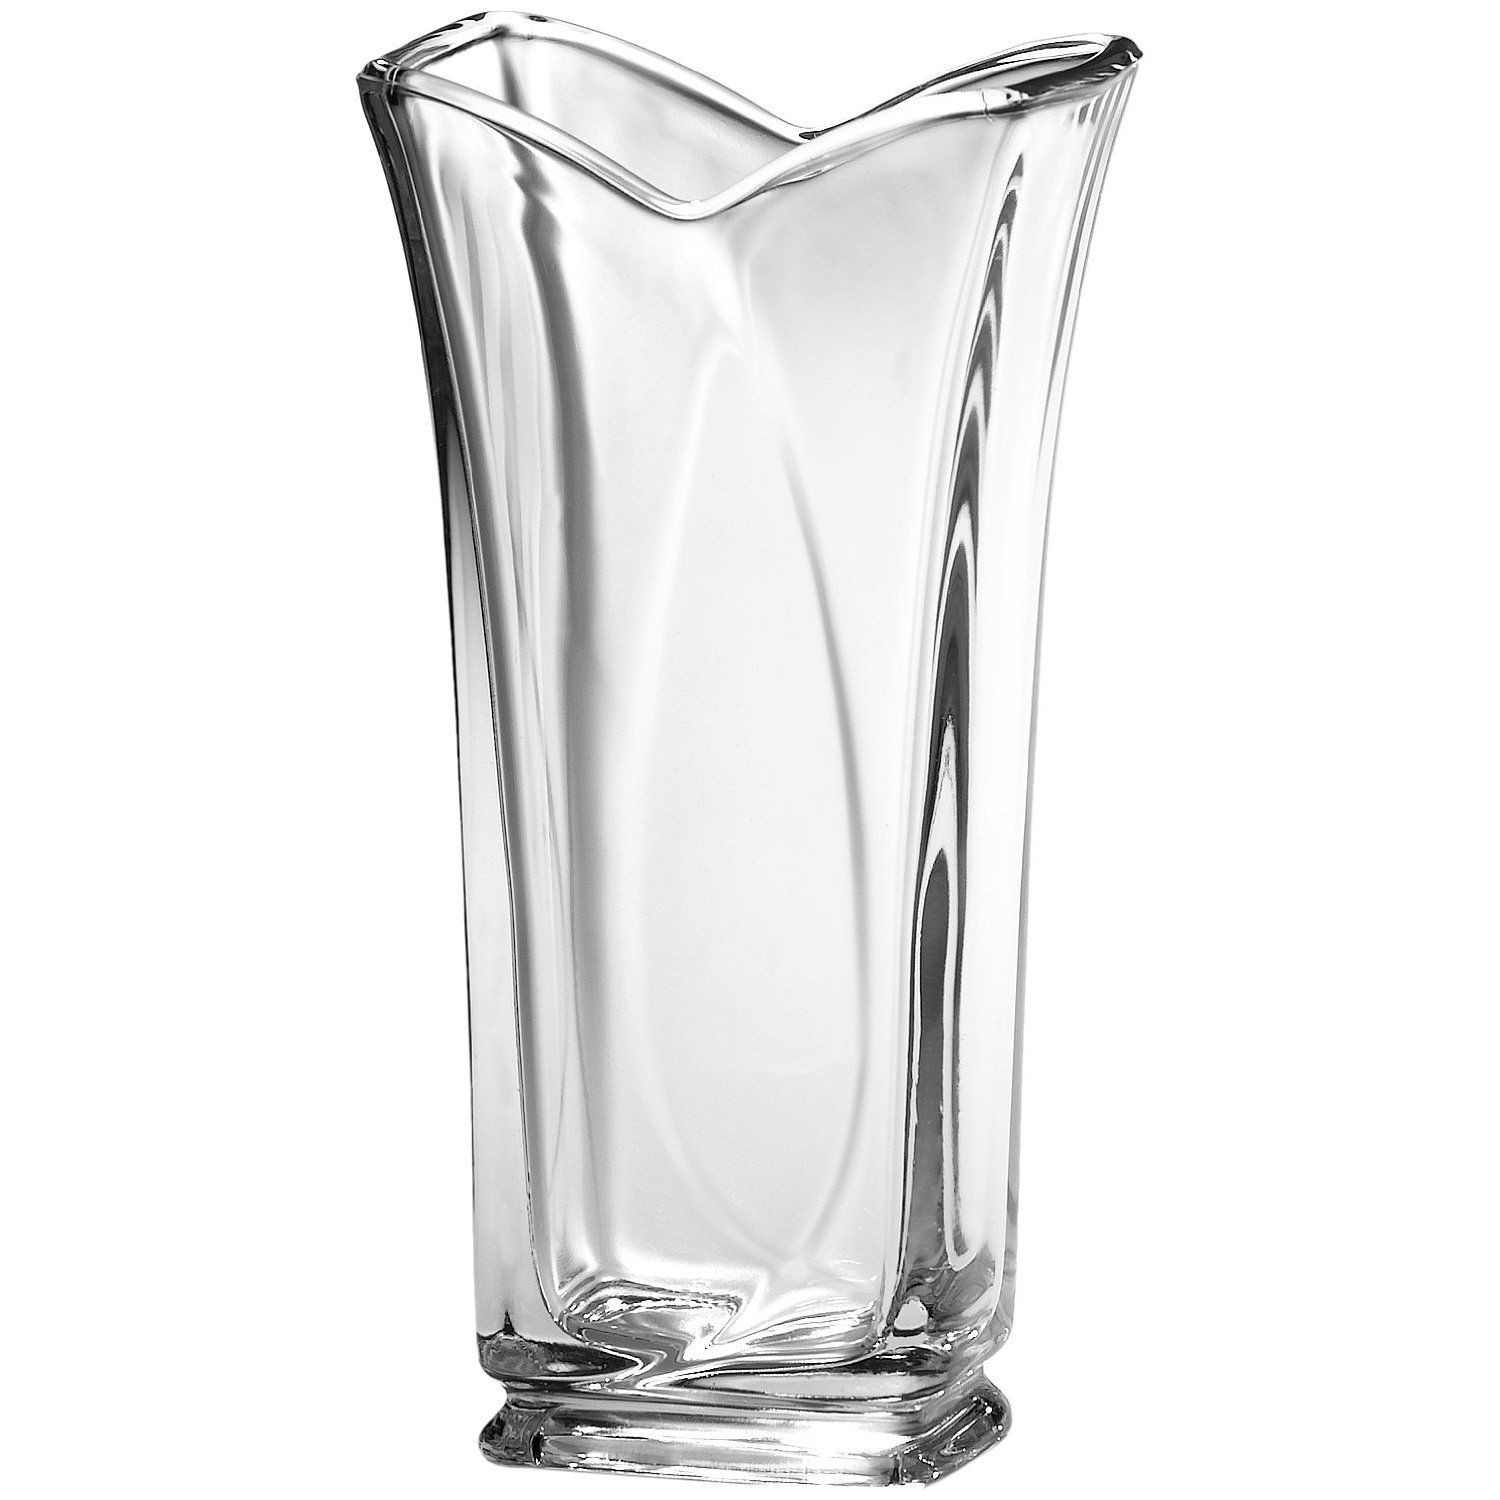 24 inch glass vase of flower vase glass vase pinterest flowers vase glasses and vase inside flower vase glass